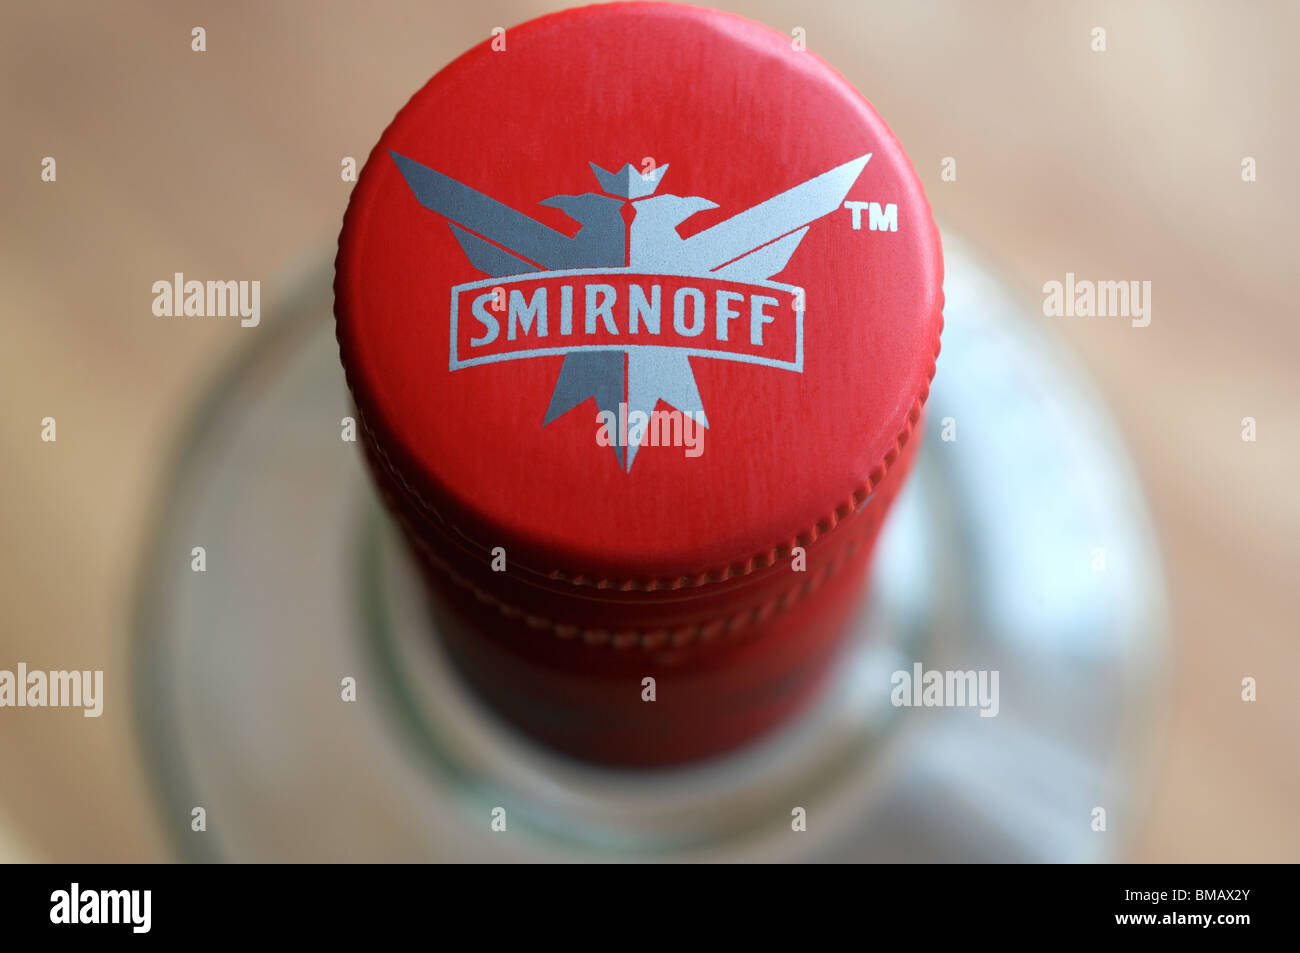 Bottle of Smirnoff vodka Stock Photo